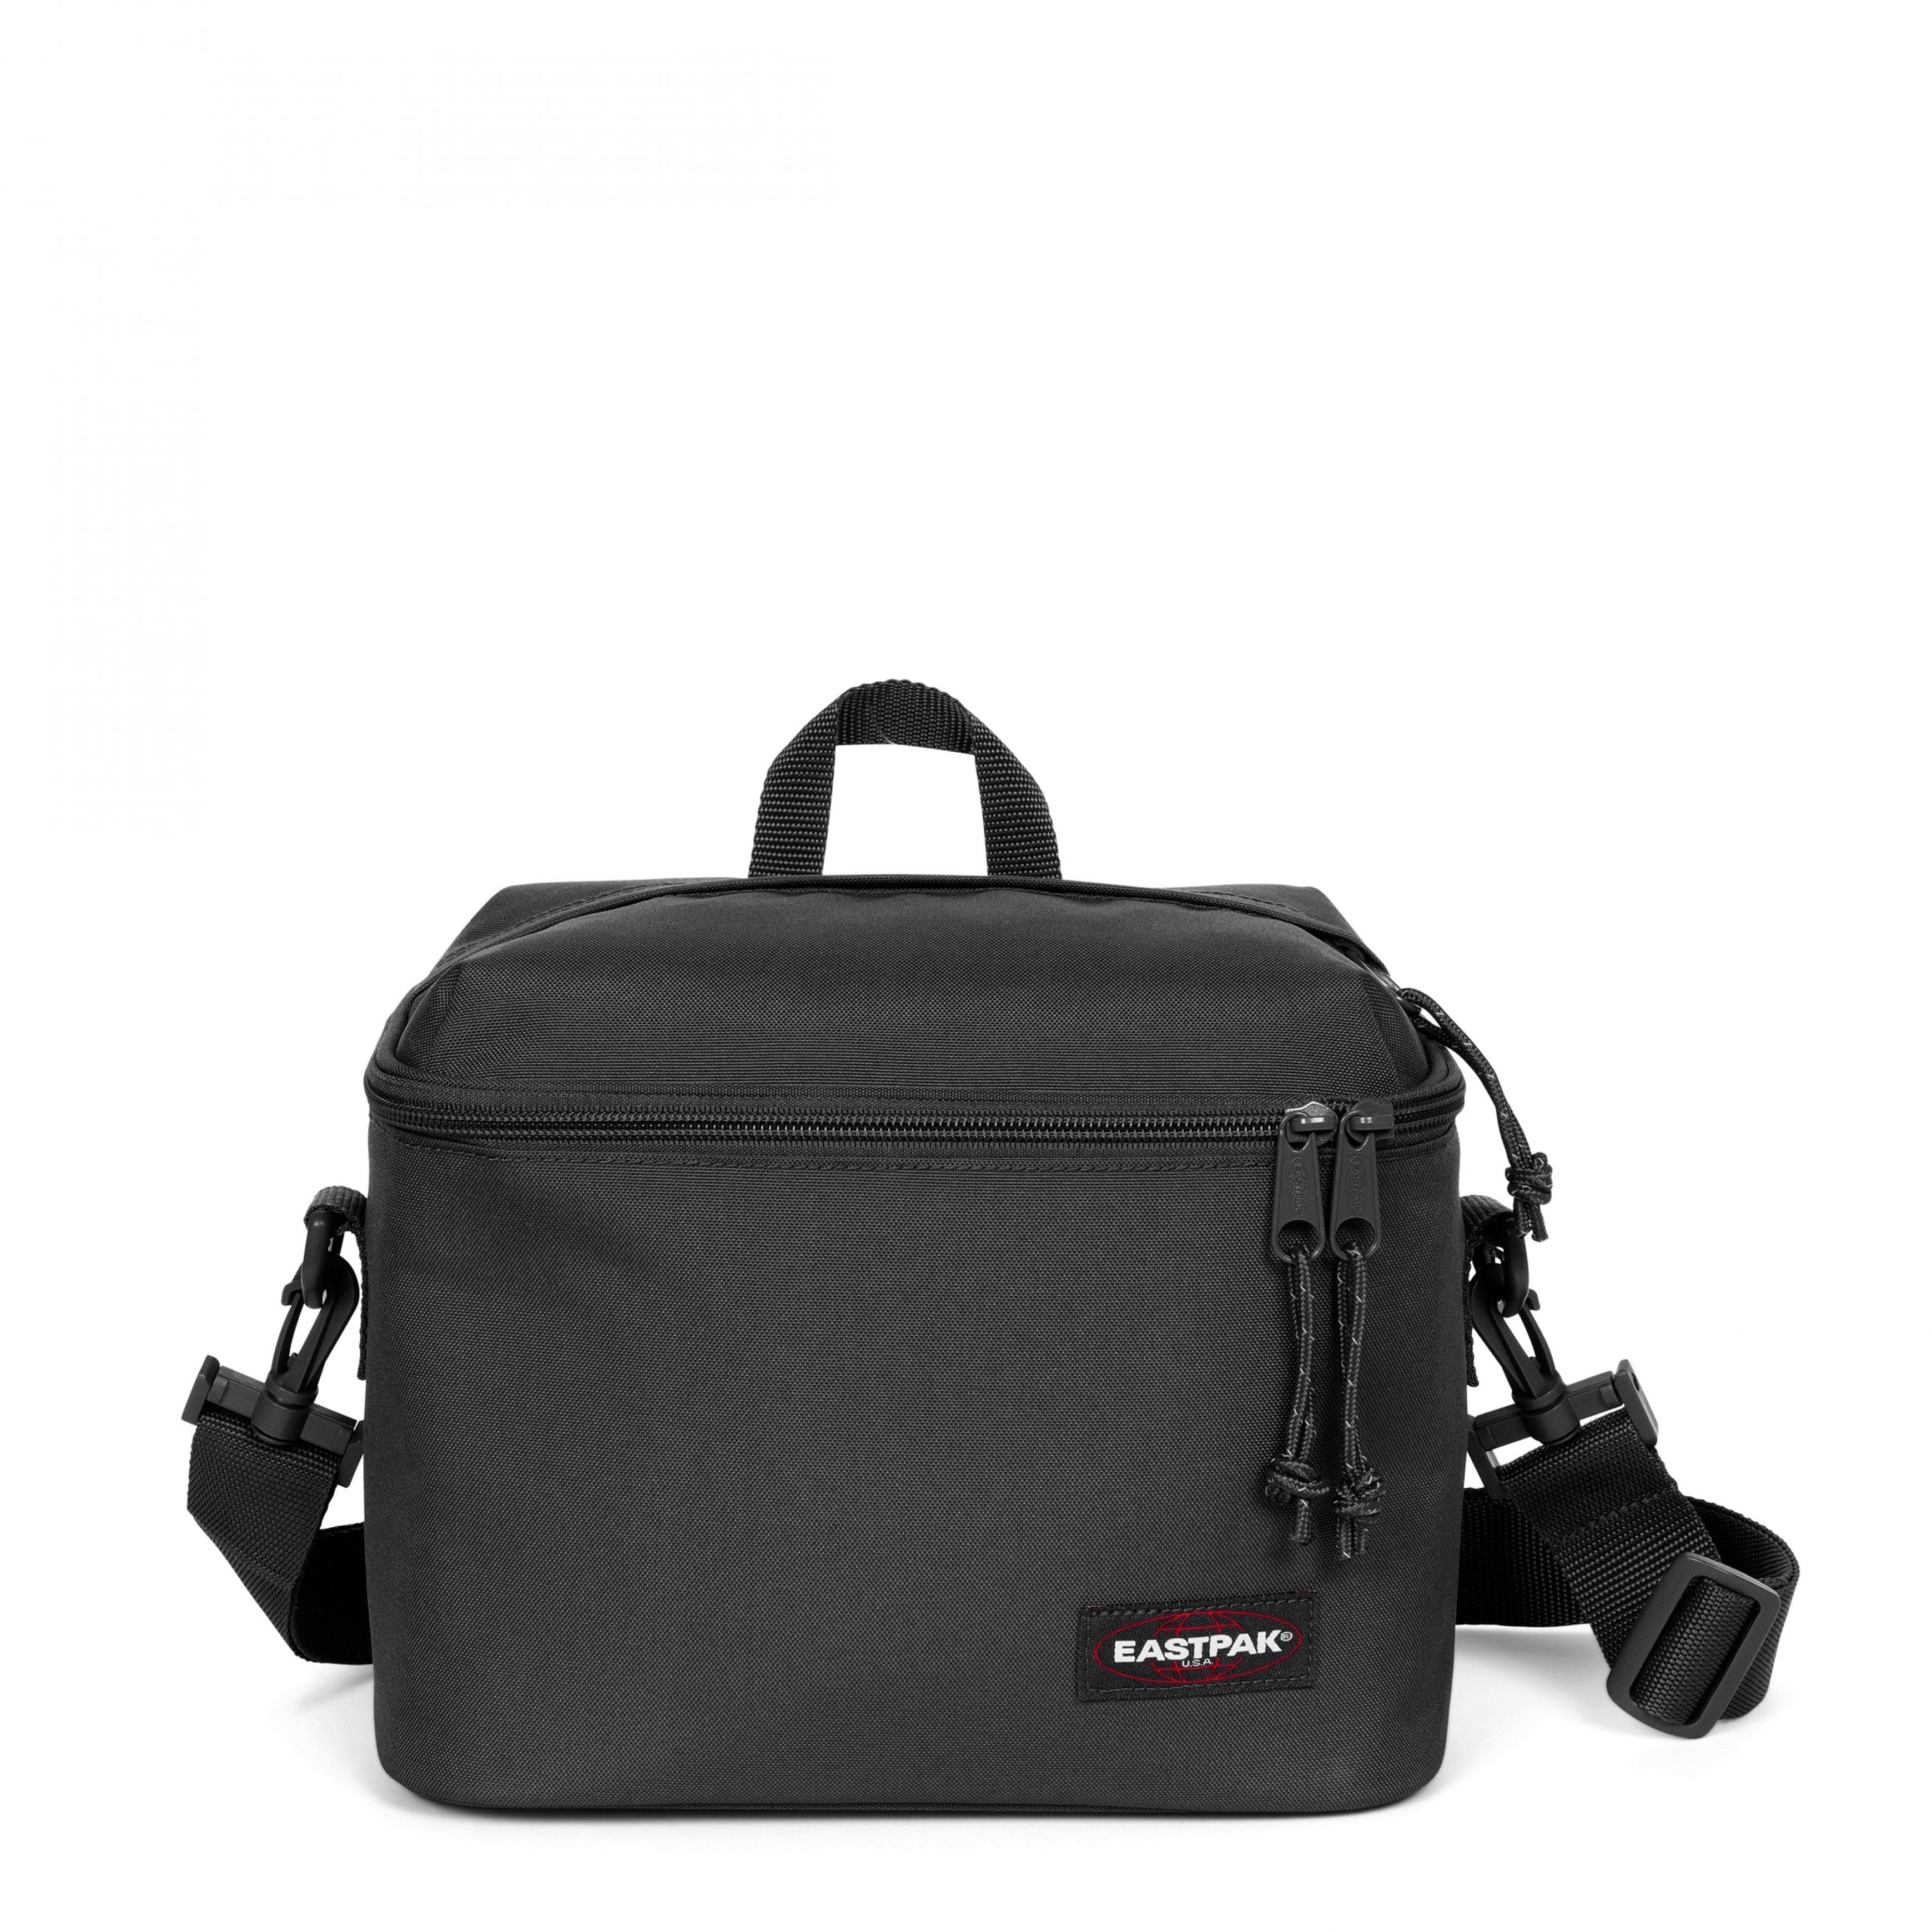 EASTPAK-Double Lunch-Insulated Lunch bag-Black-EK0A5BFM008